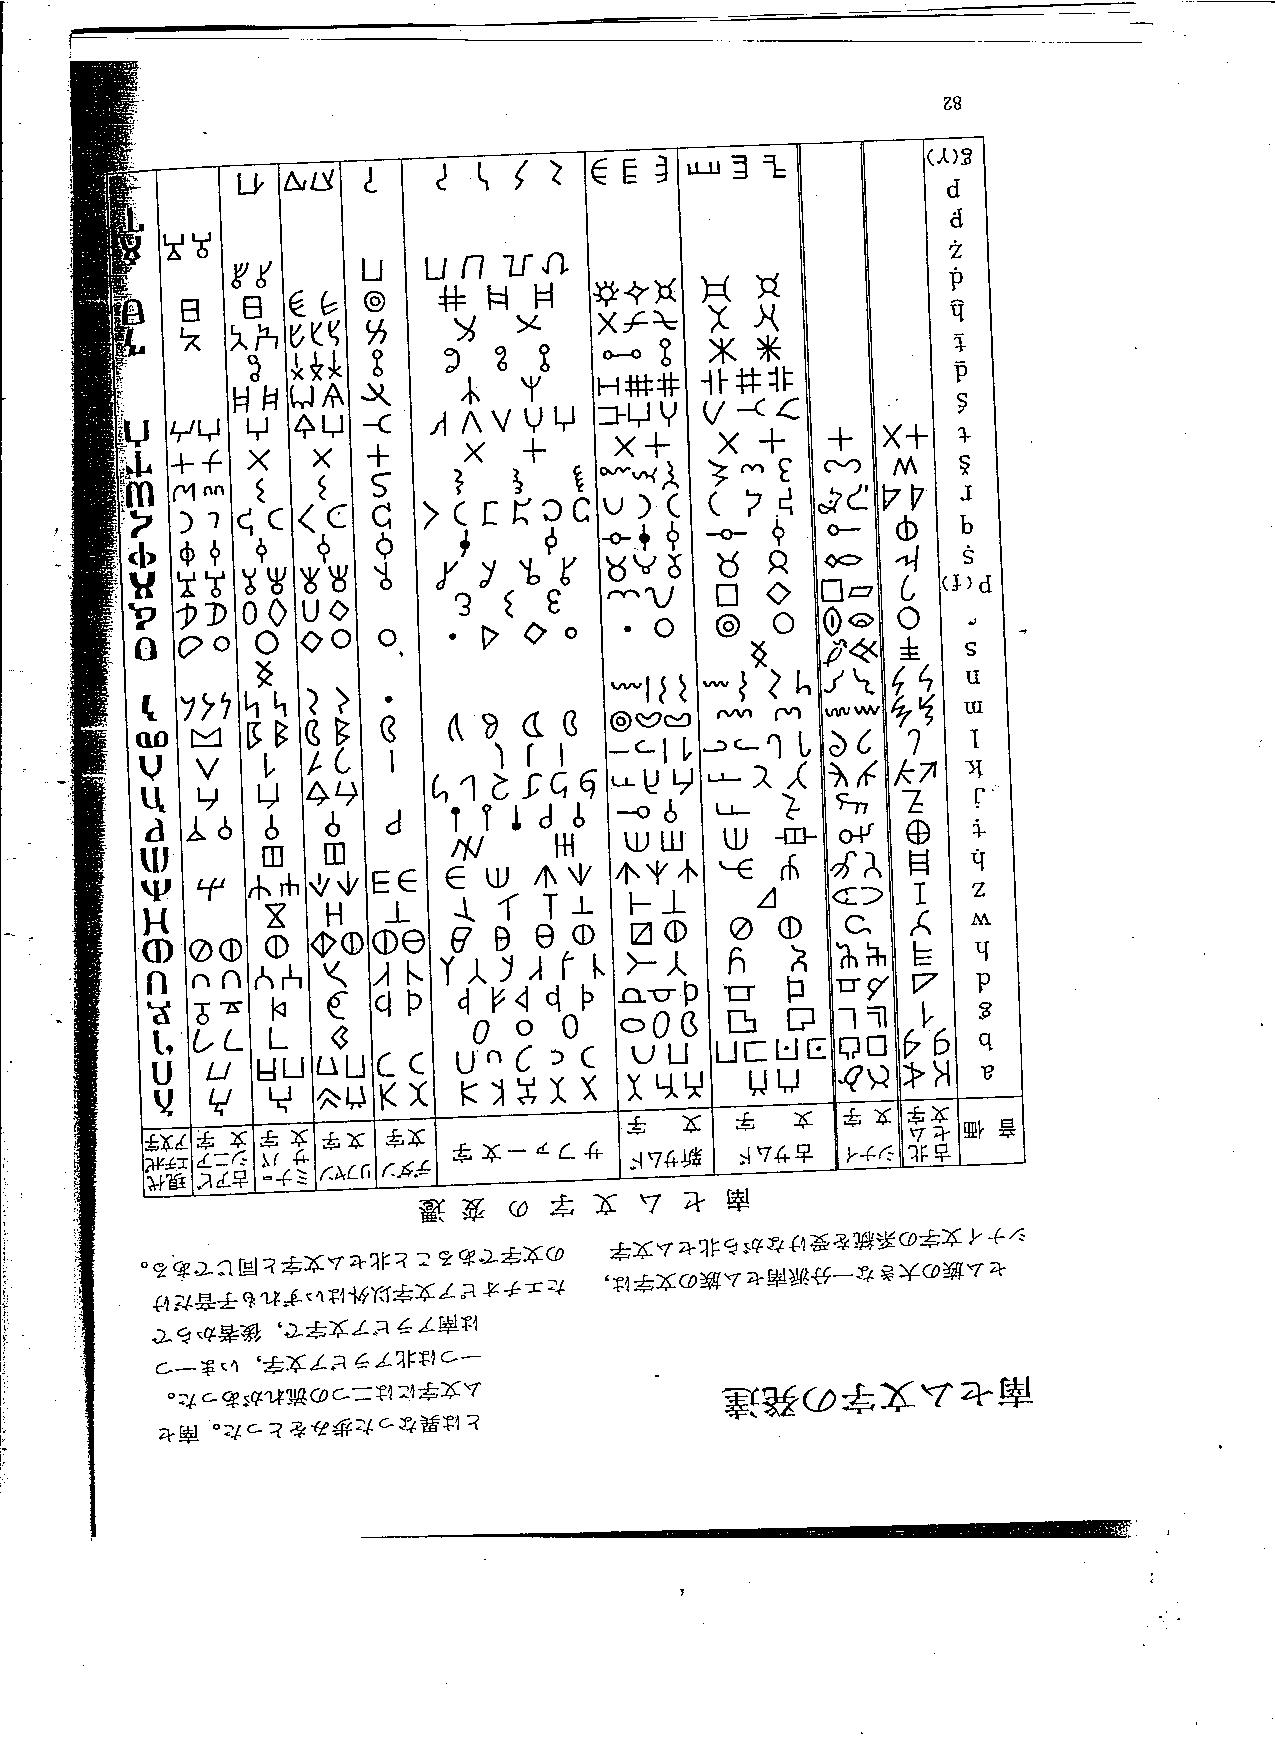 Davidic Times Inscription Analysis Ethiopian scriptsVan Wyk 2010.jpg